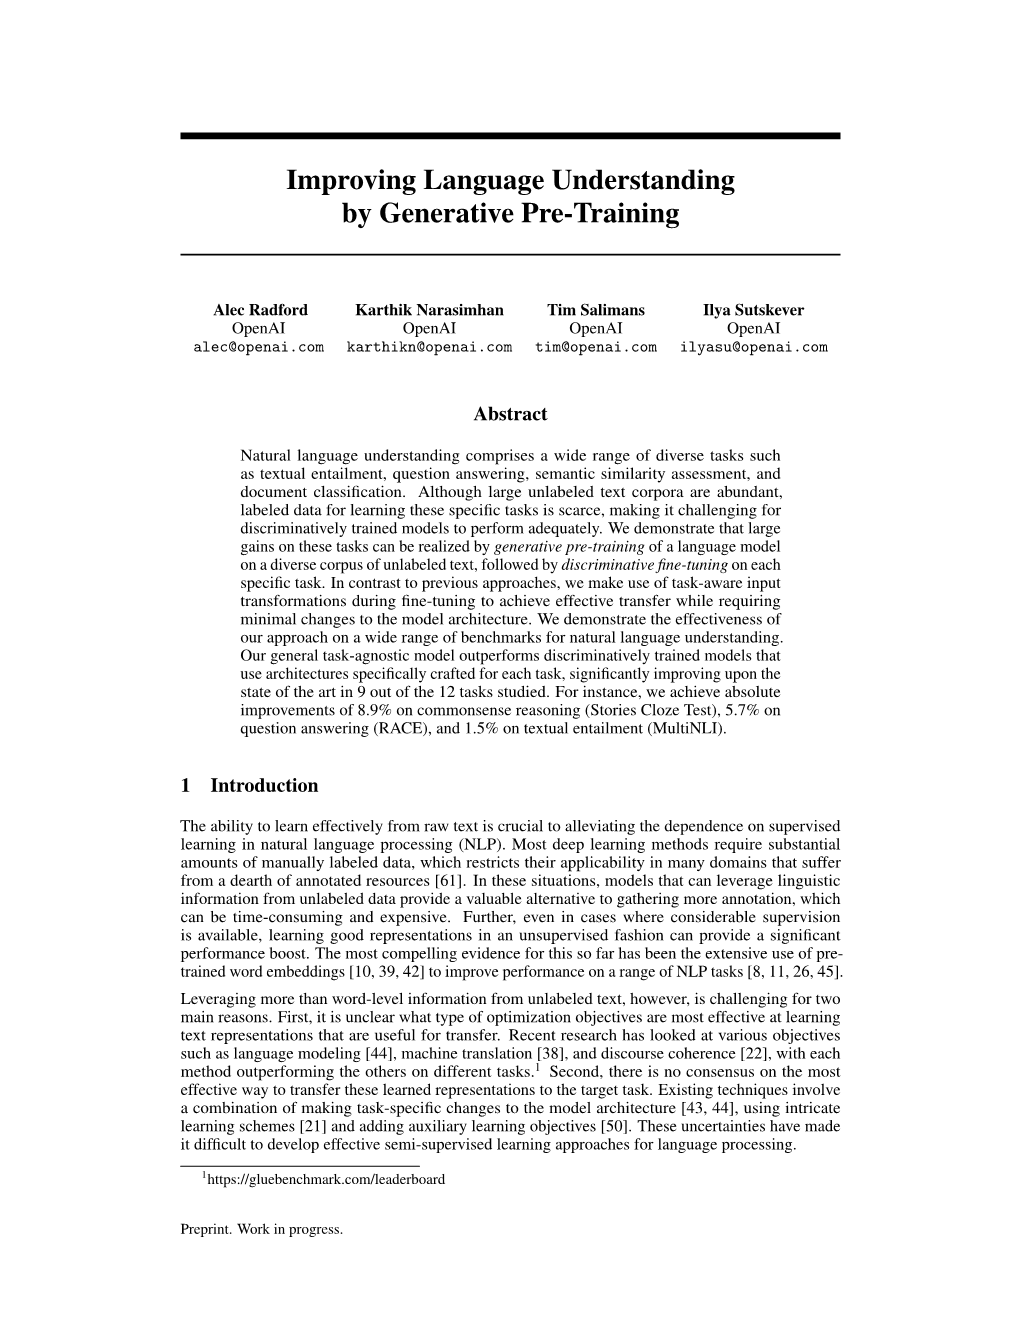 Improving Language Understanding by Generative Pre-Training